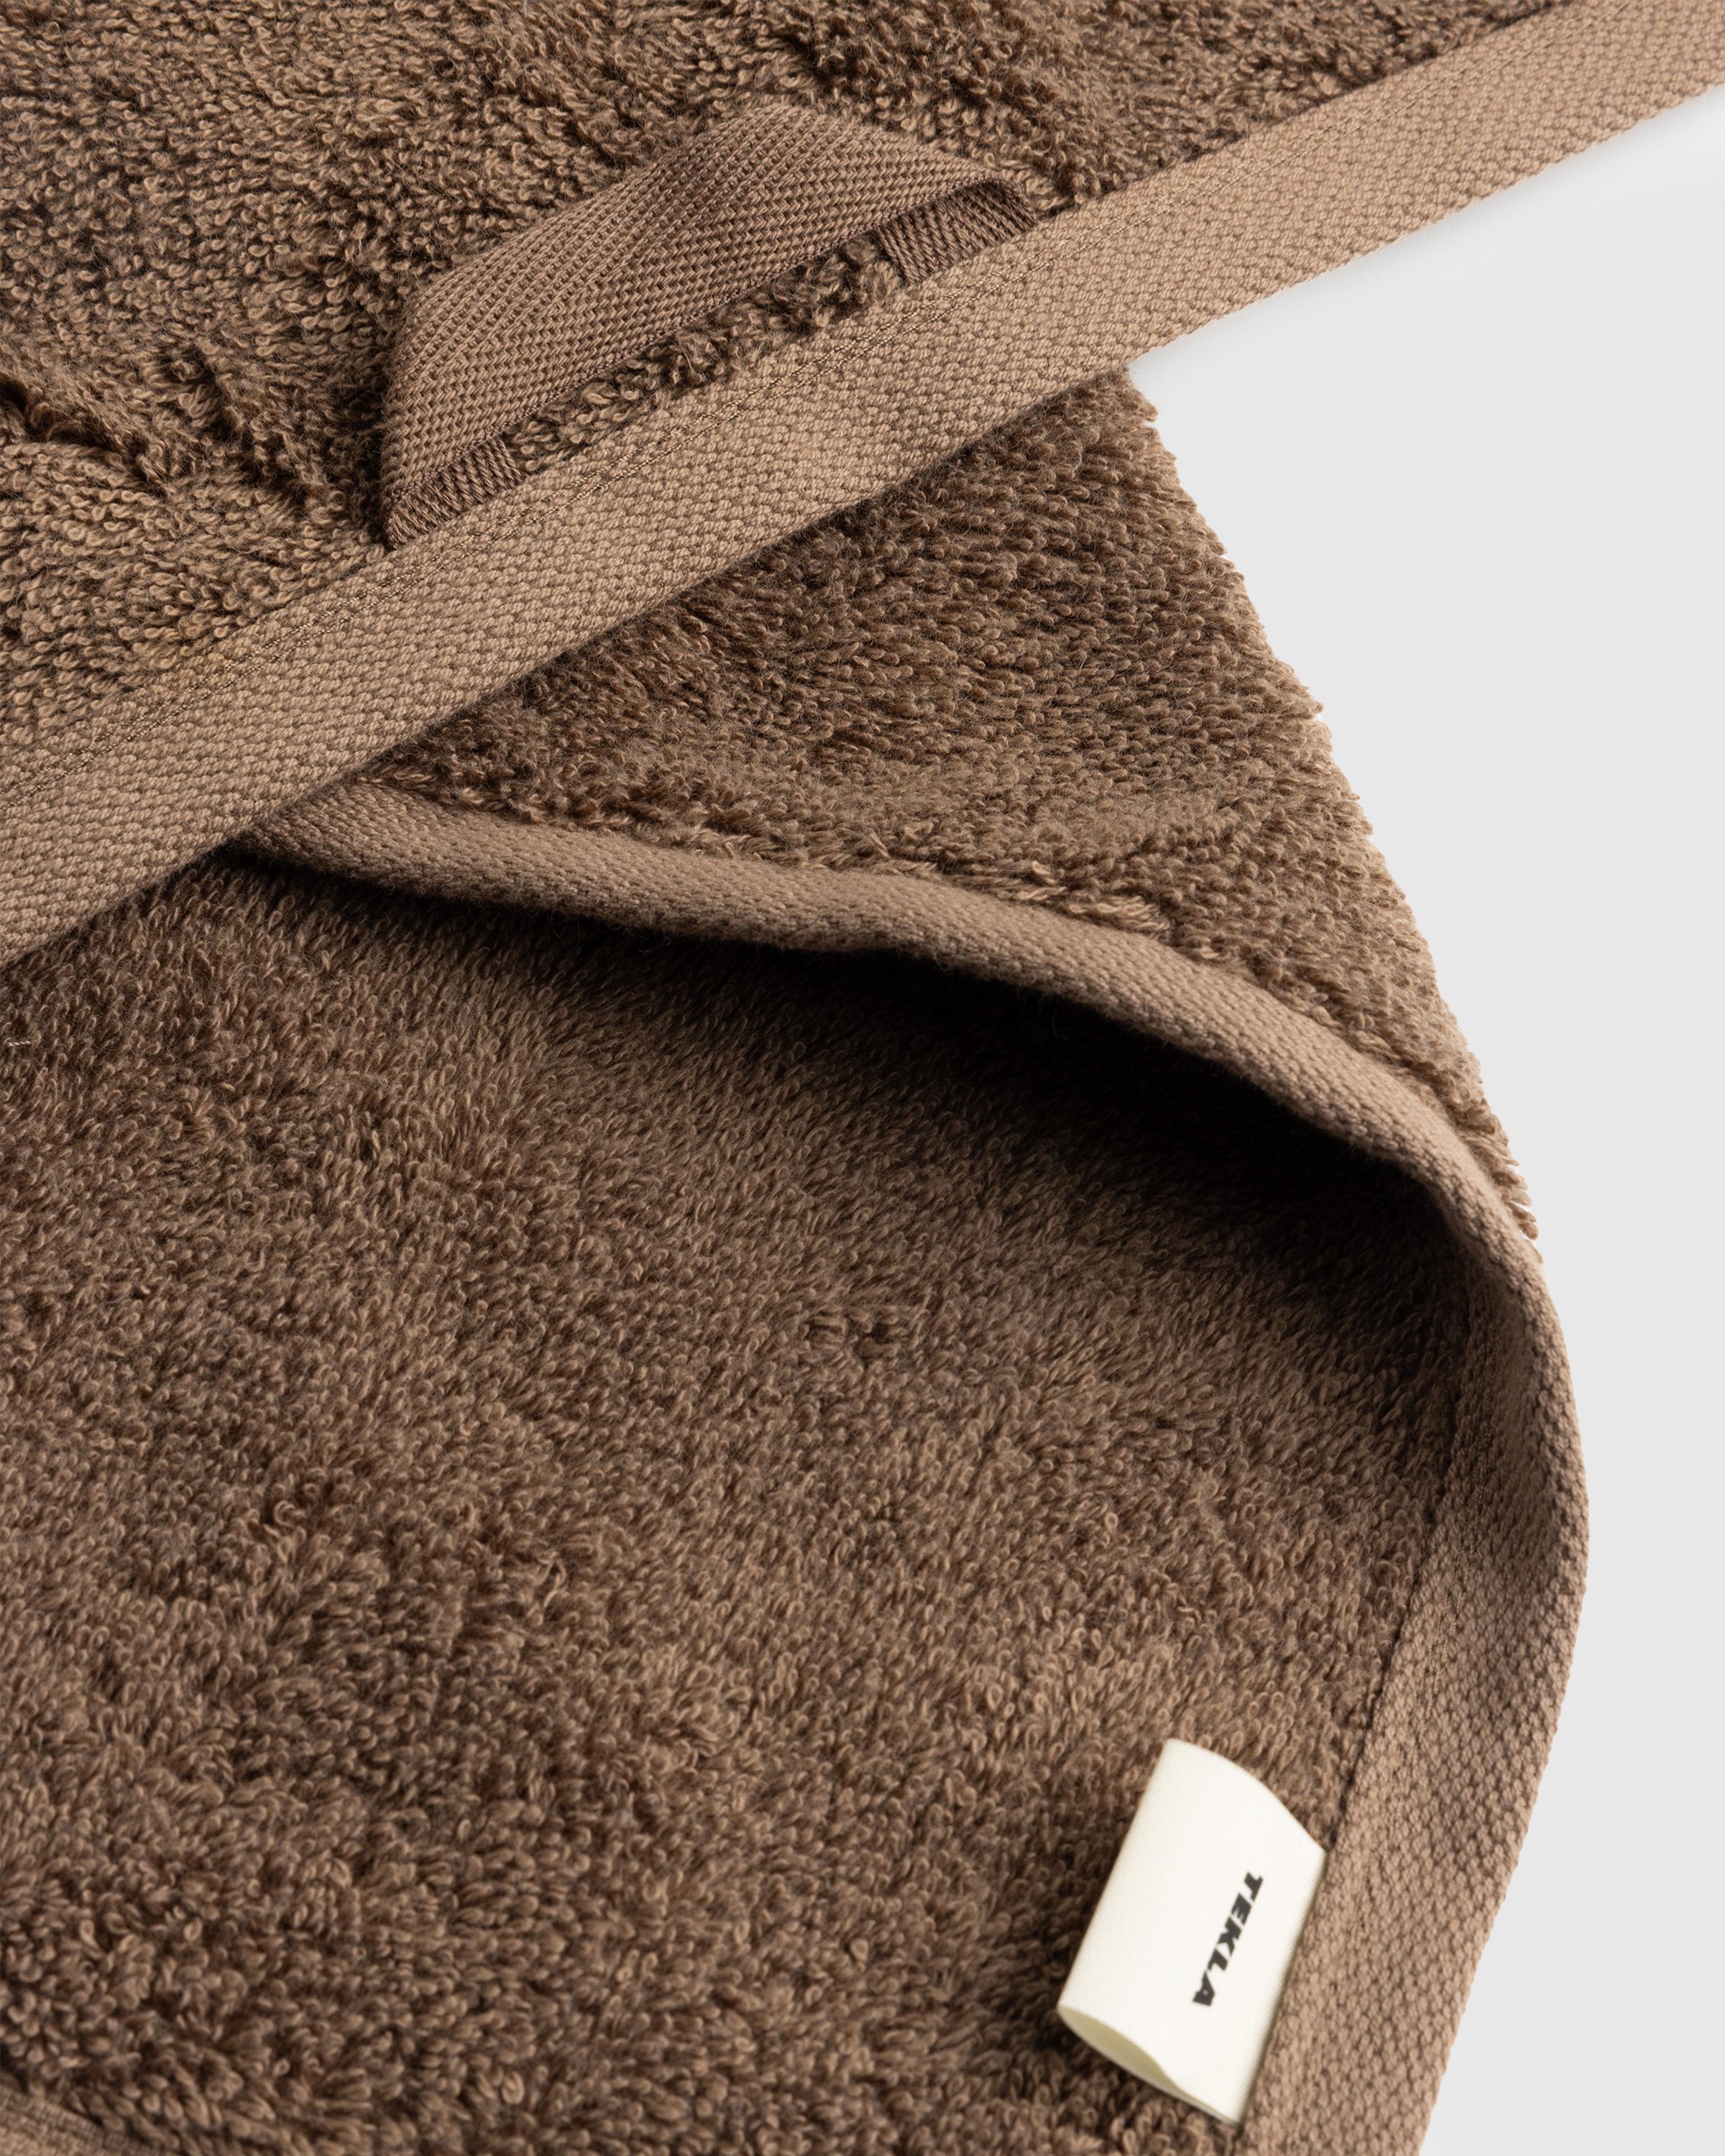 Tekla - Hand Towel Kodiak Brown - Lifestyle - Brown - Image 4